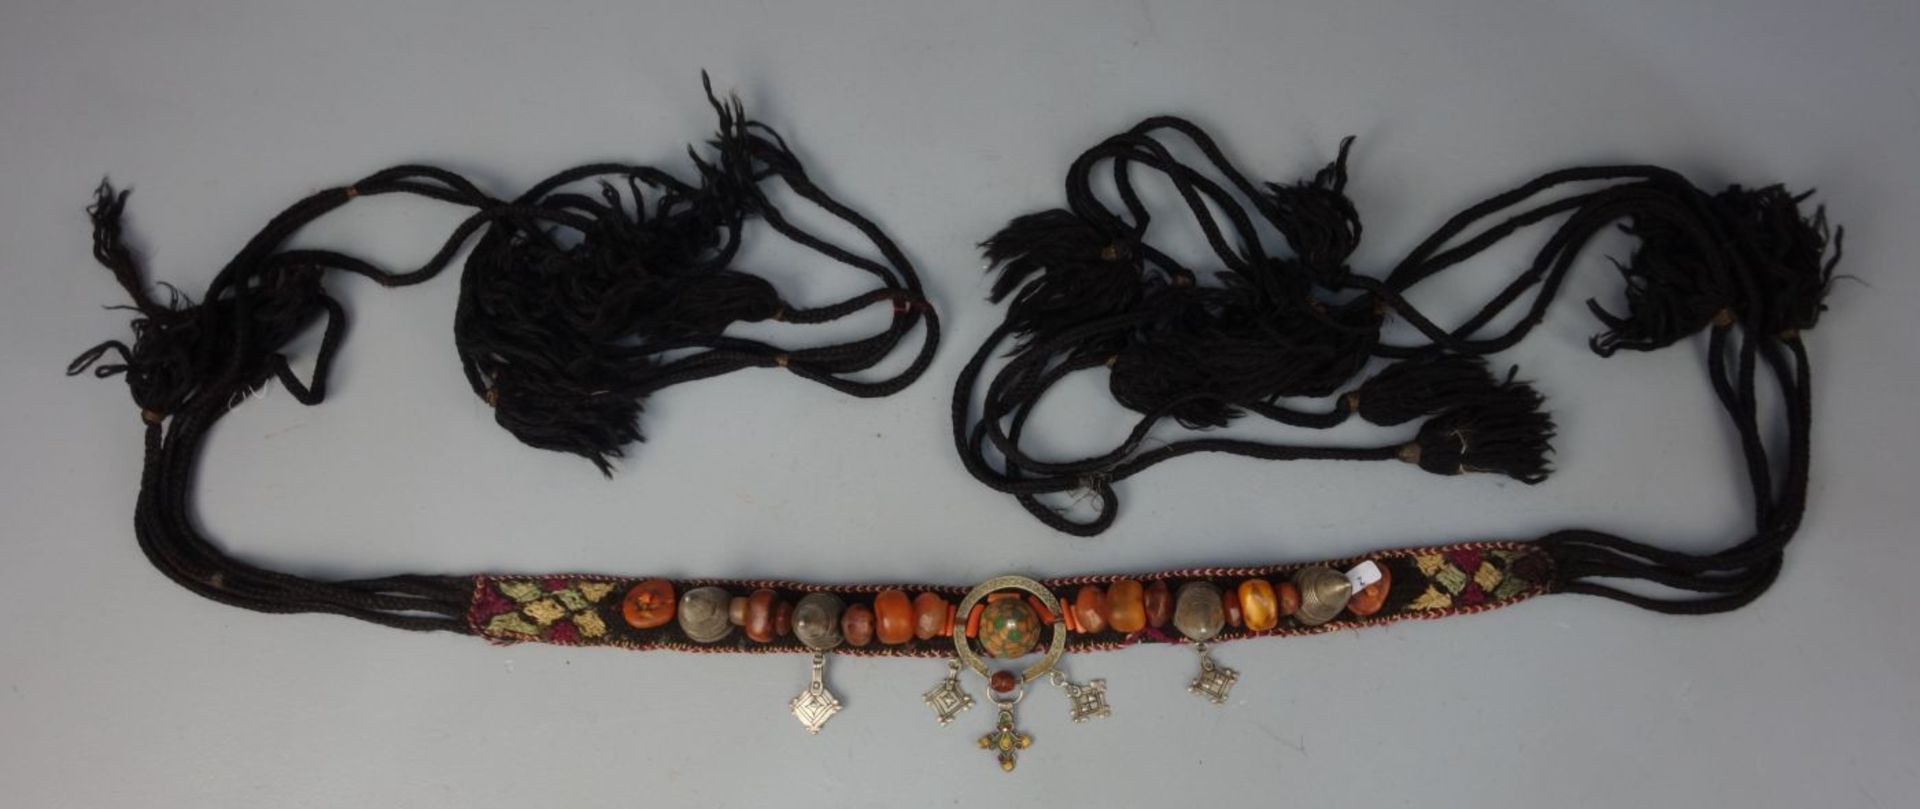 BERBER-SCHMUCK: KAMELSCHMUCK / oriental accessoires for camels, Midelt, Marokko. Wolle / Knüpfarbeit